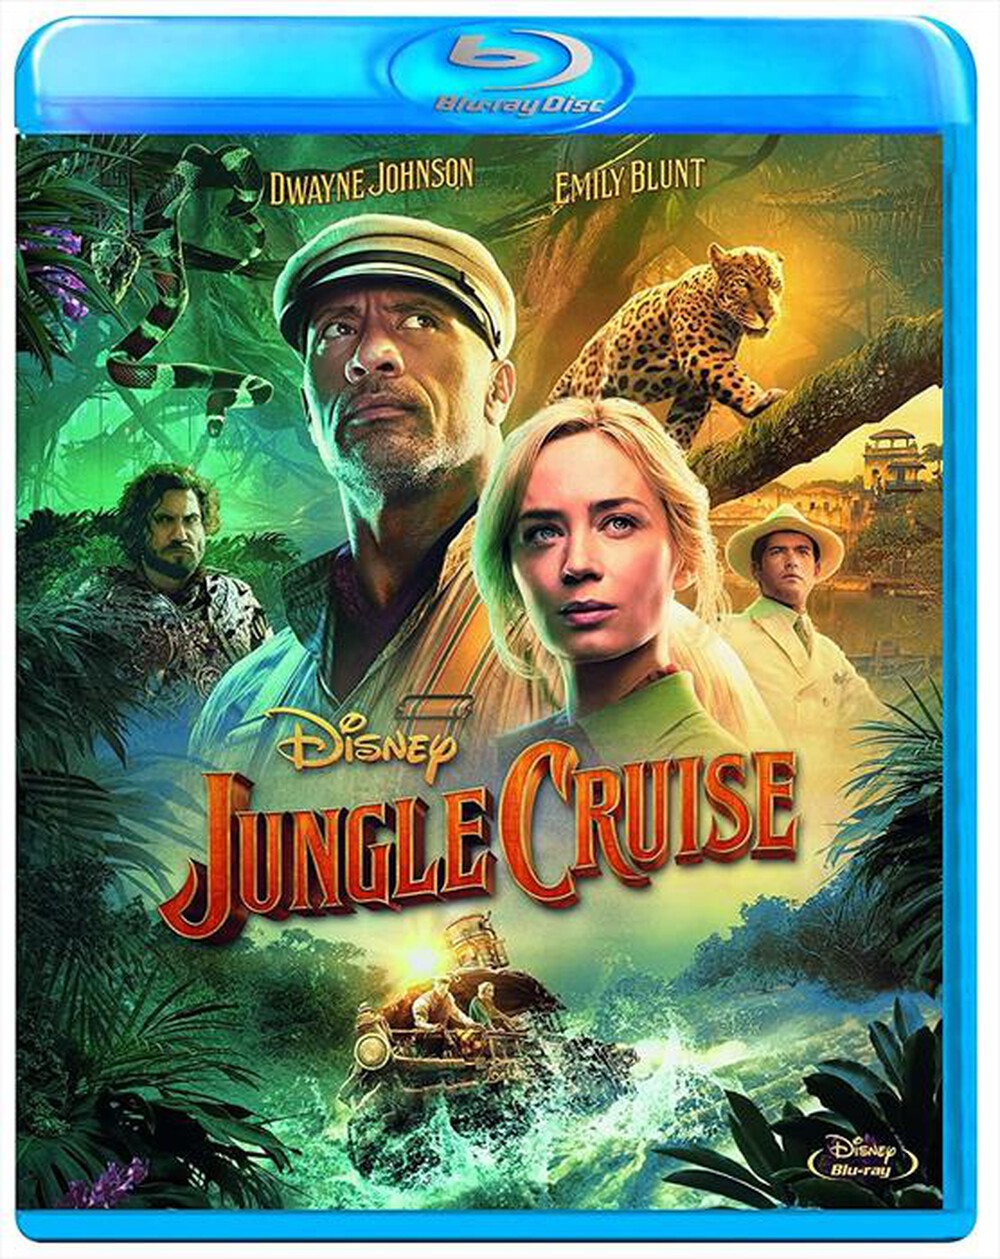 "EAGLE PICTURES - Jungle Cruise"